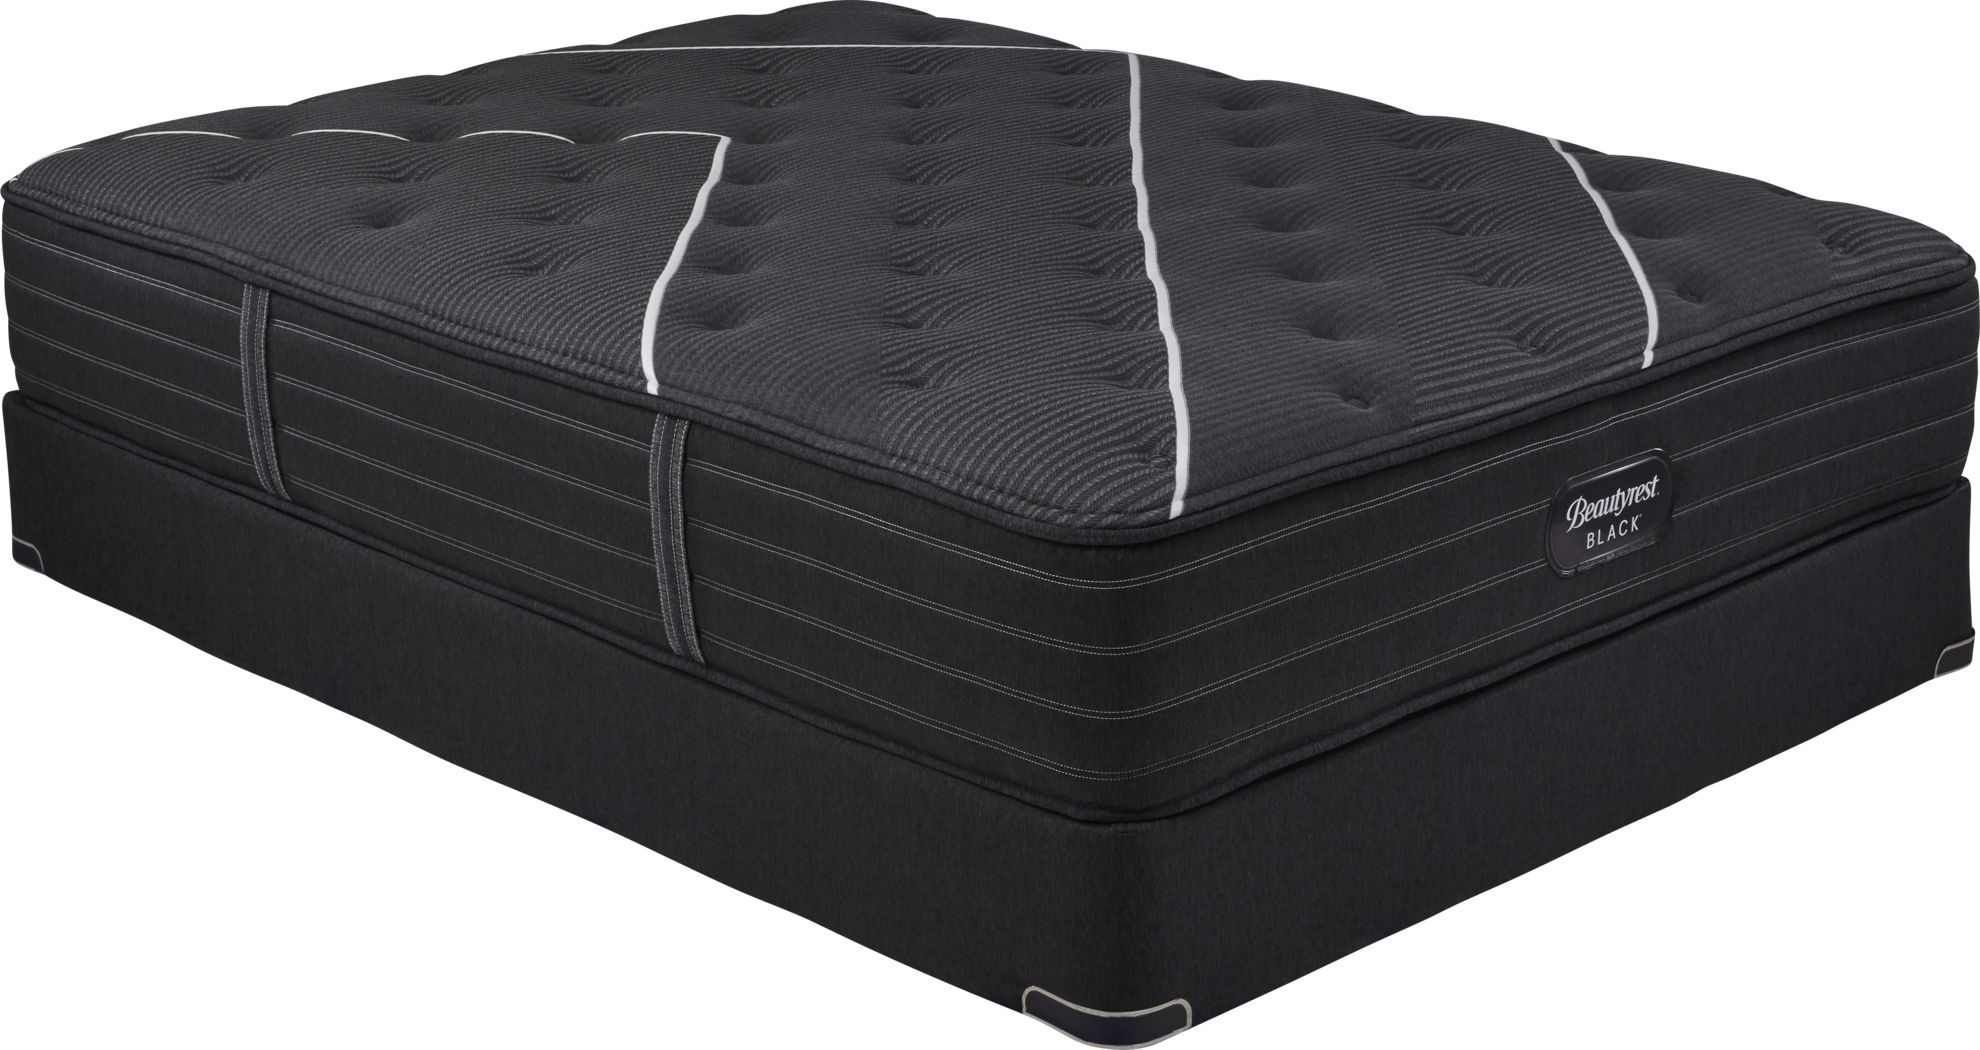 king mattress set black friday